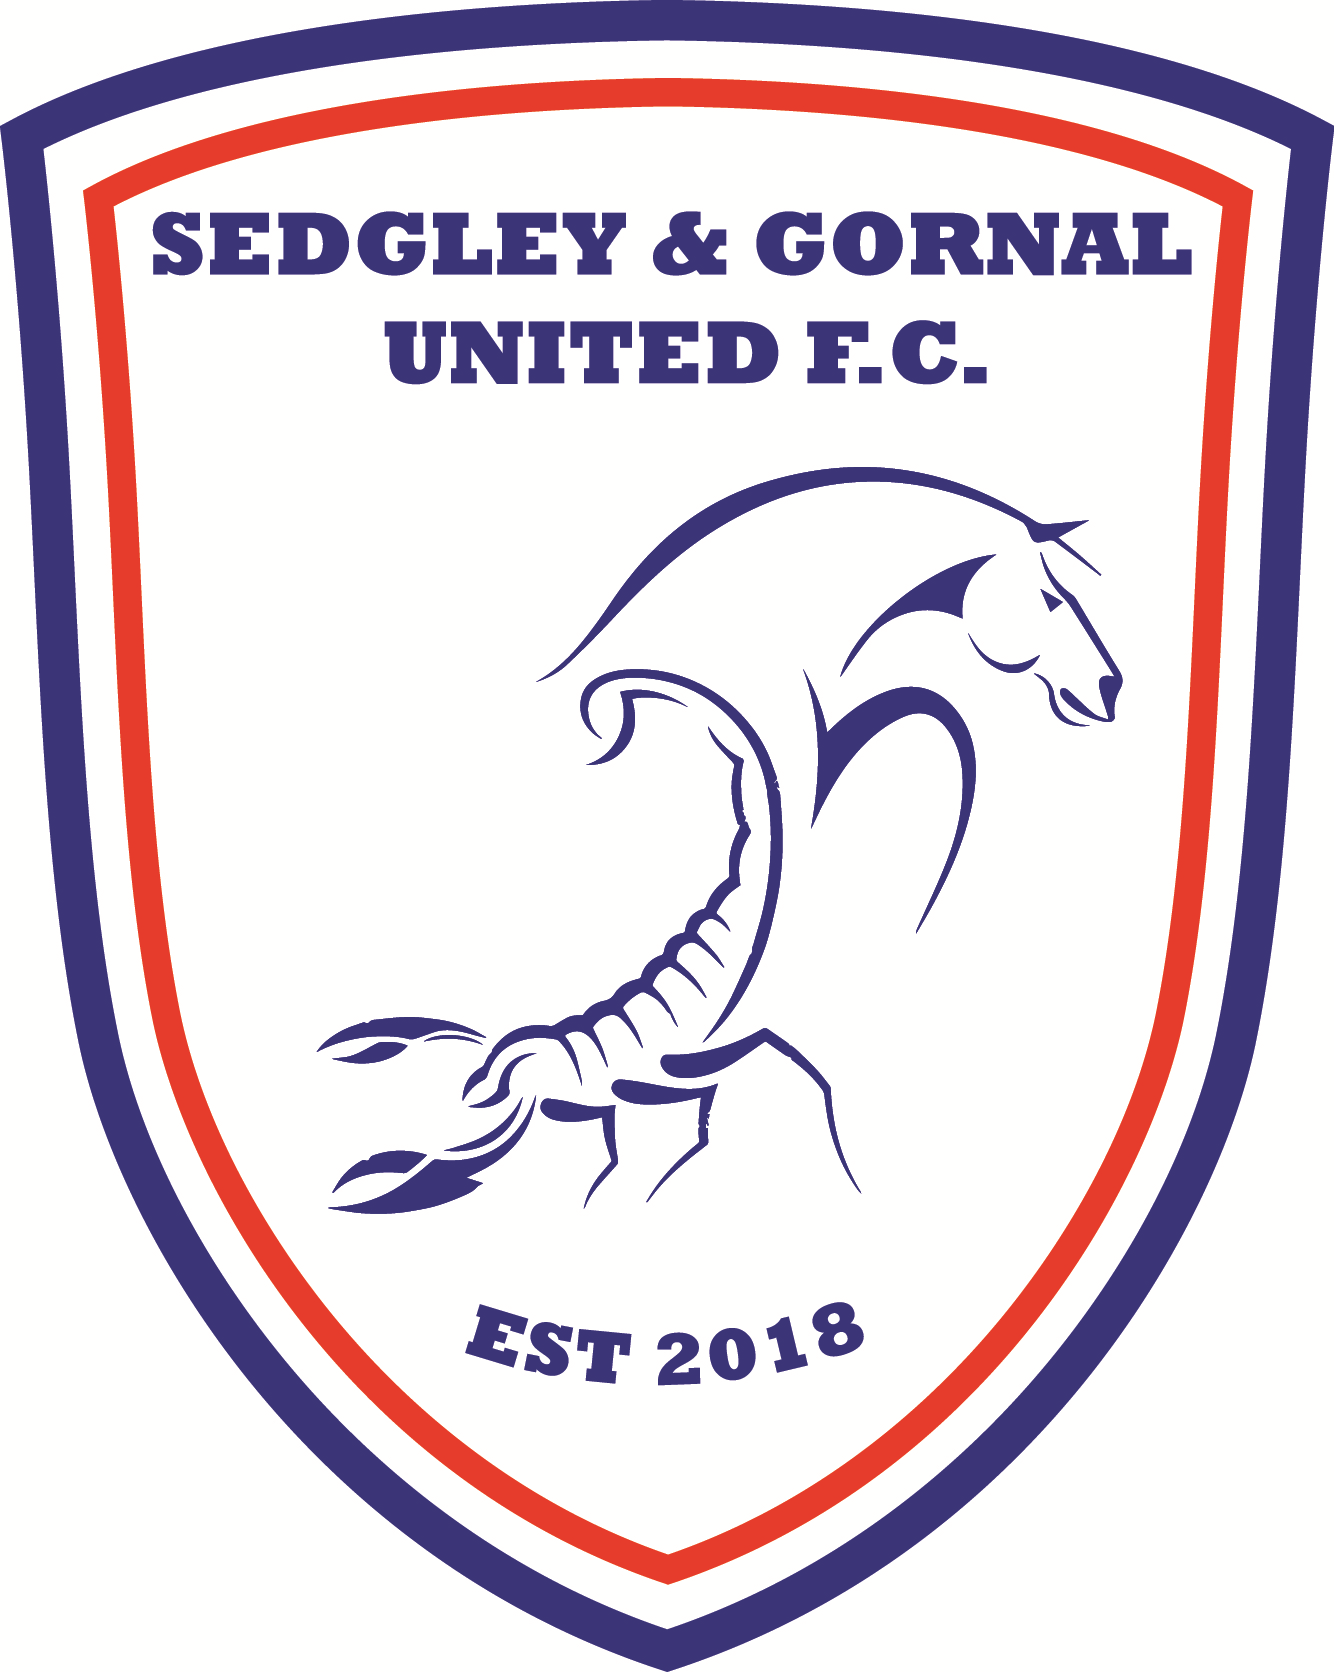 Sedgley and Gornal United Football Club